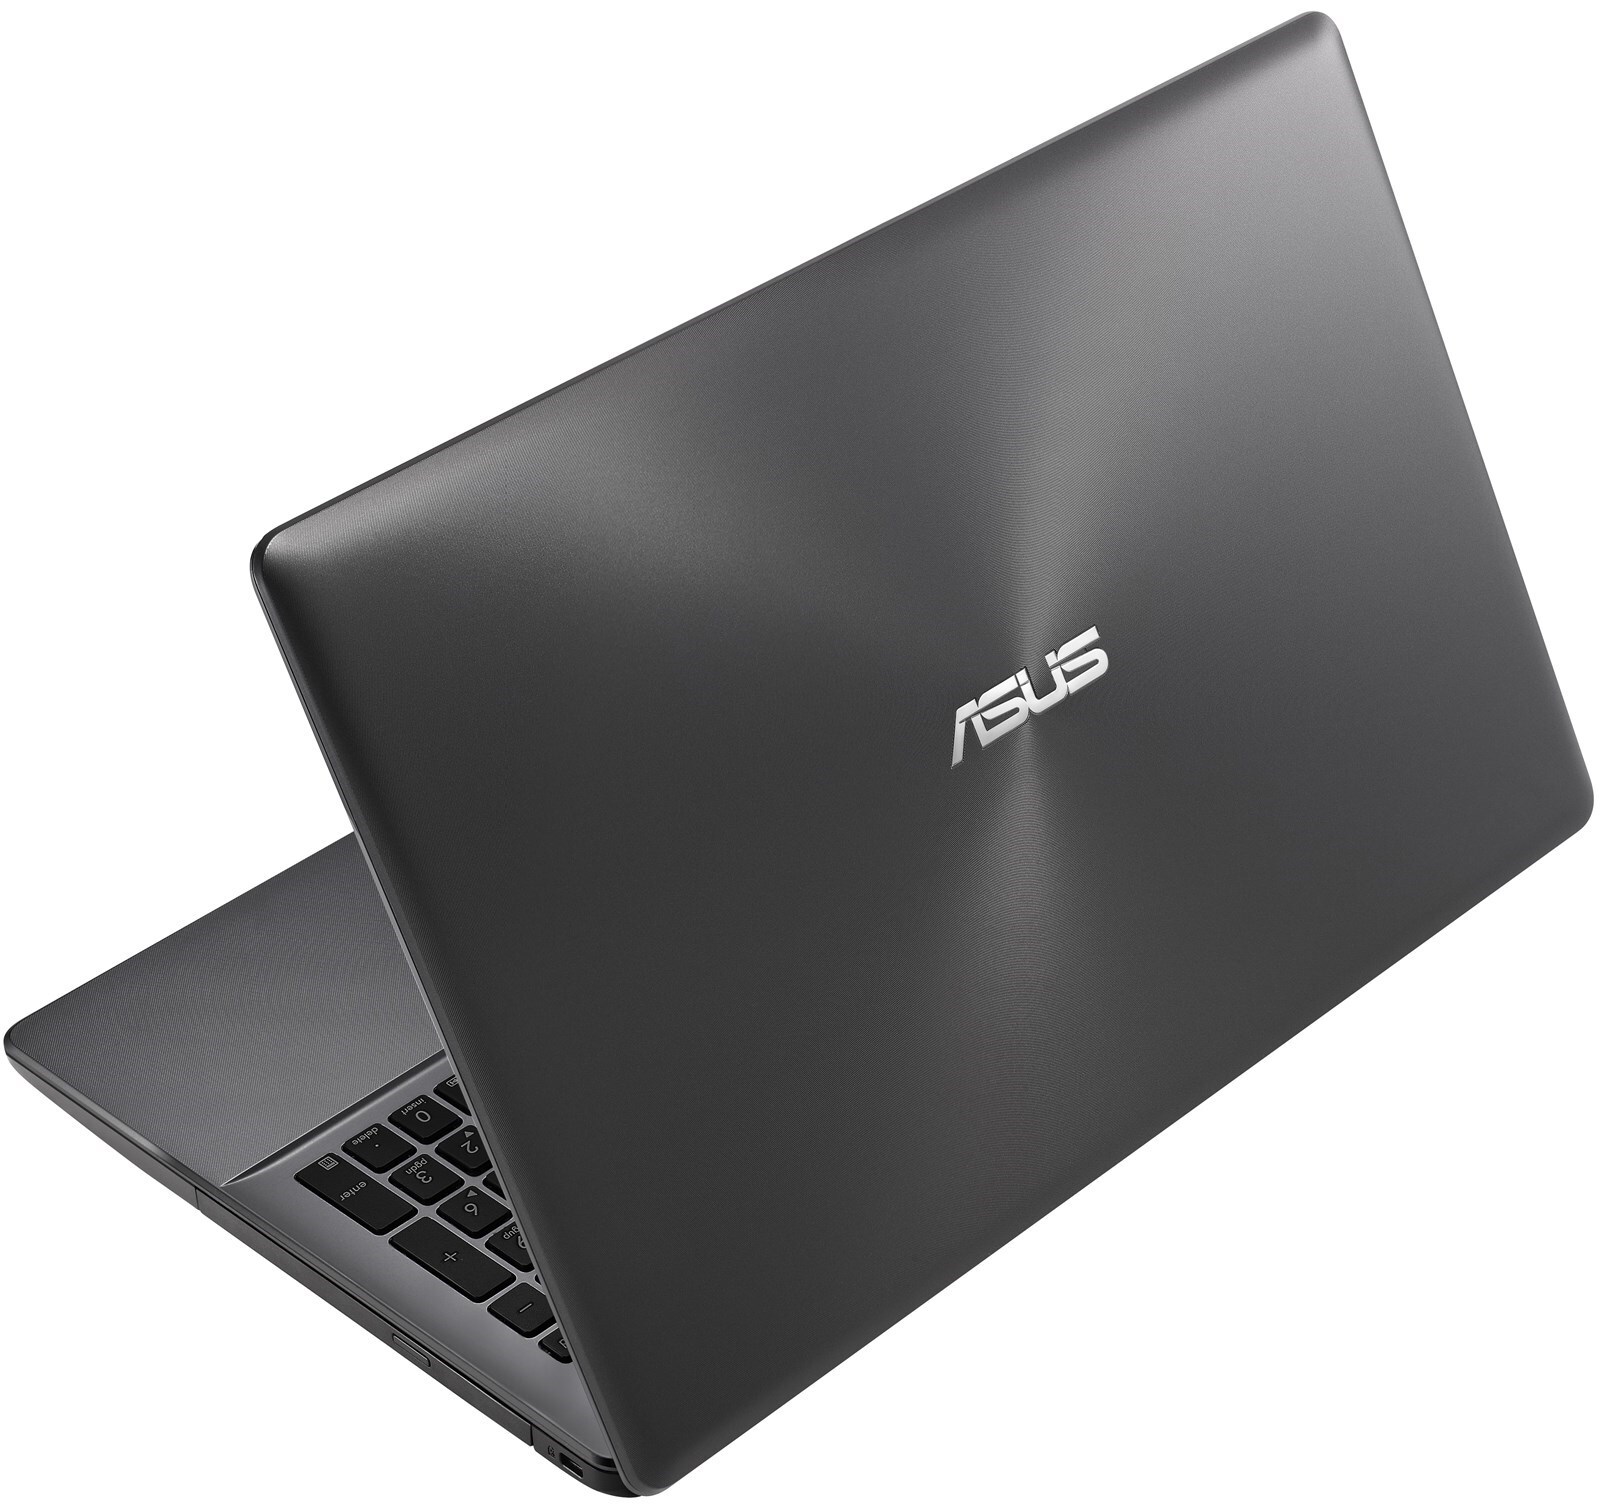 Laptop Asus P550LAV-XX599D - Intel Core i3-4010U 1.7 Ghz, 4GB RAM, 500GB HDD, Intel HD Graphics 4400, 15.6 inch